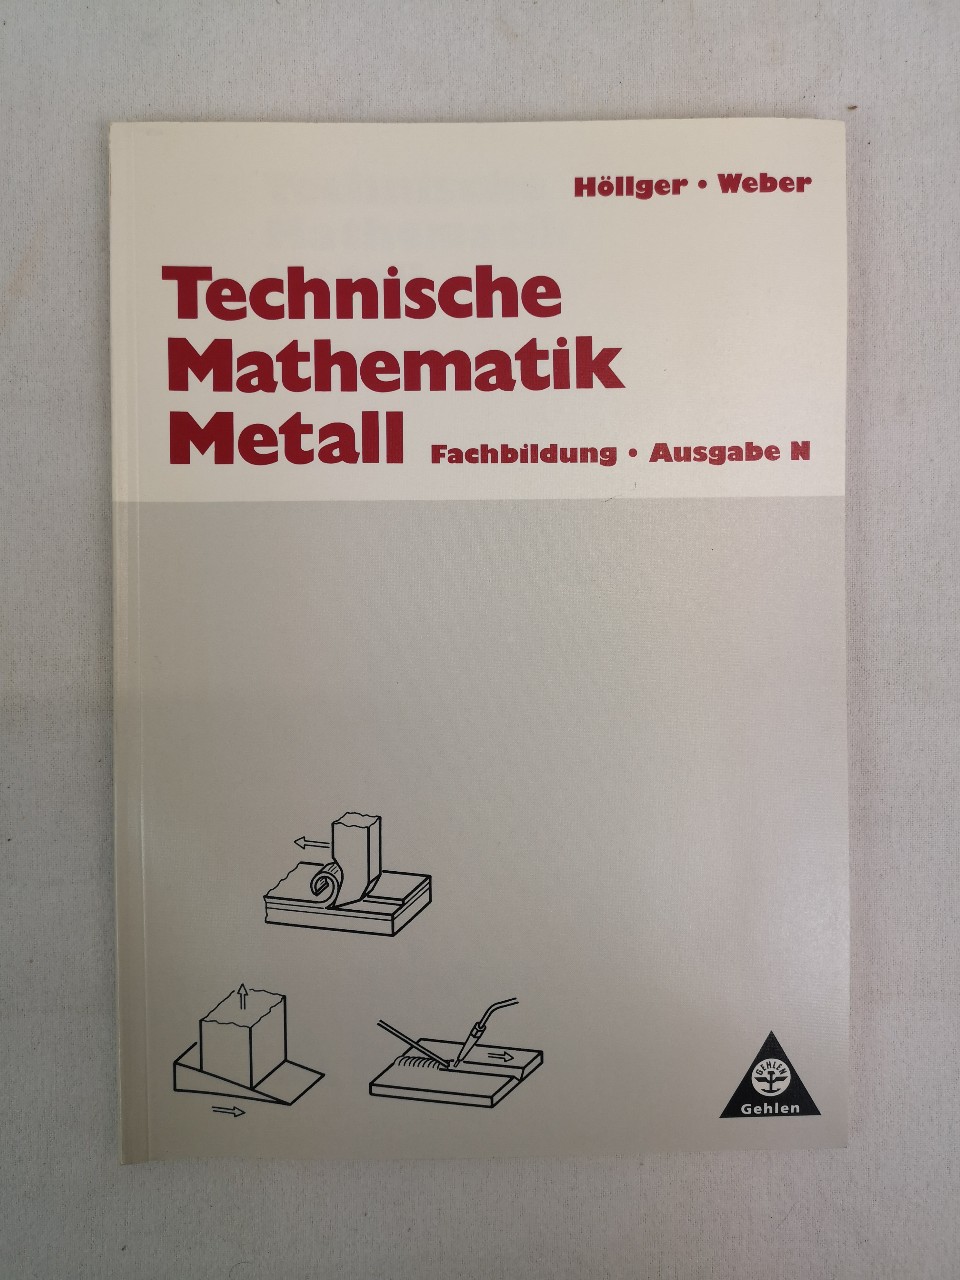 Hllger und Weber:  Technische Mathematik. Metall. Fachbildung. Ausgabe N. 